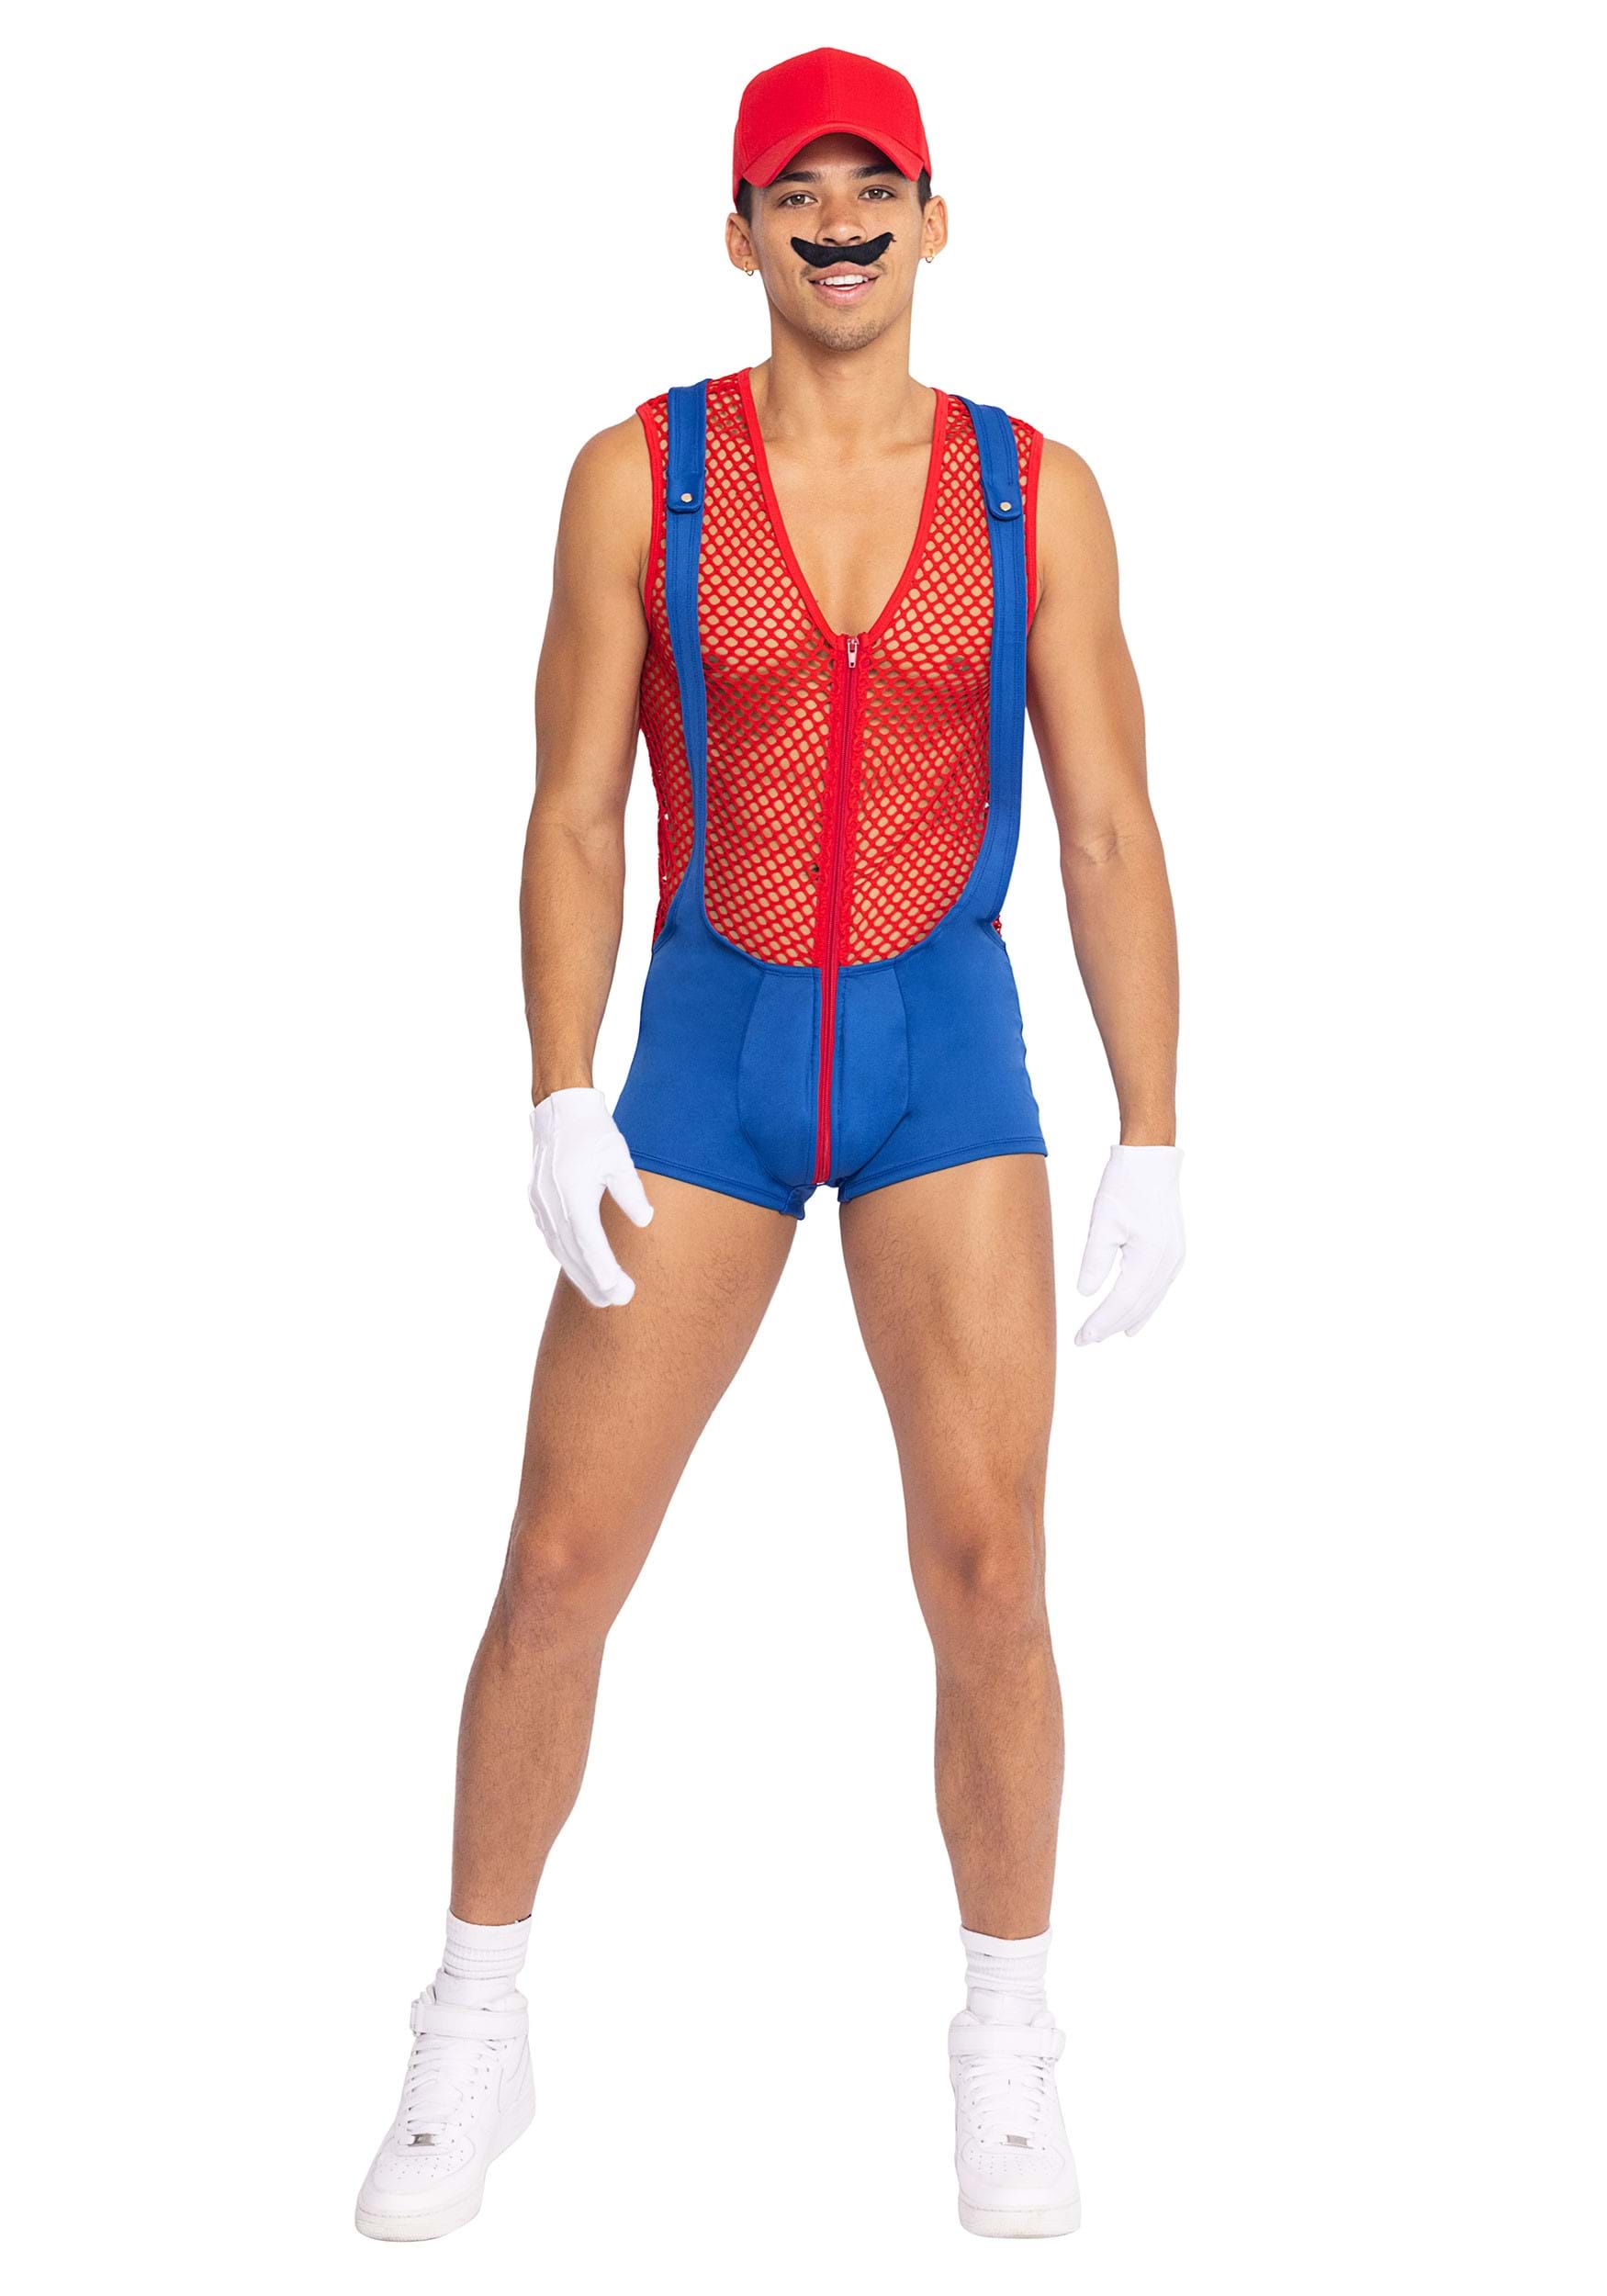 Red Super Plumber Bro Costume for Men | Sexy Men